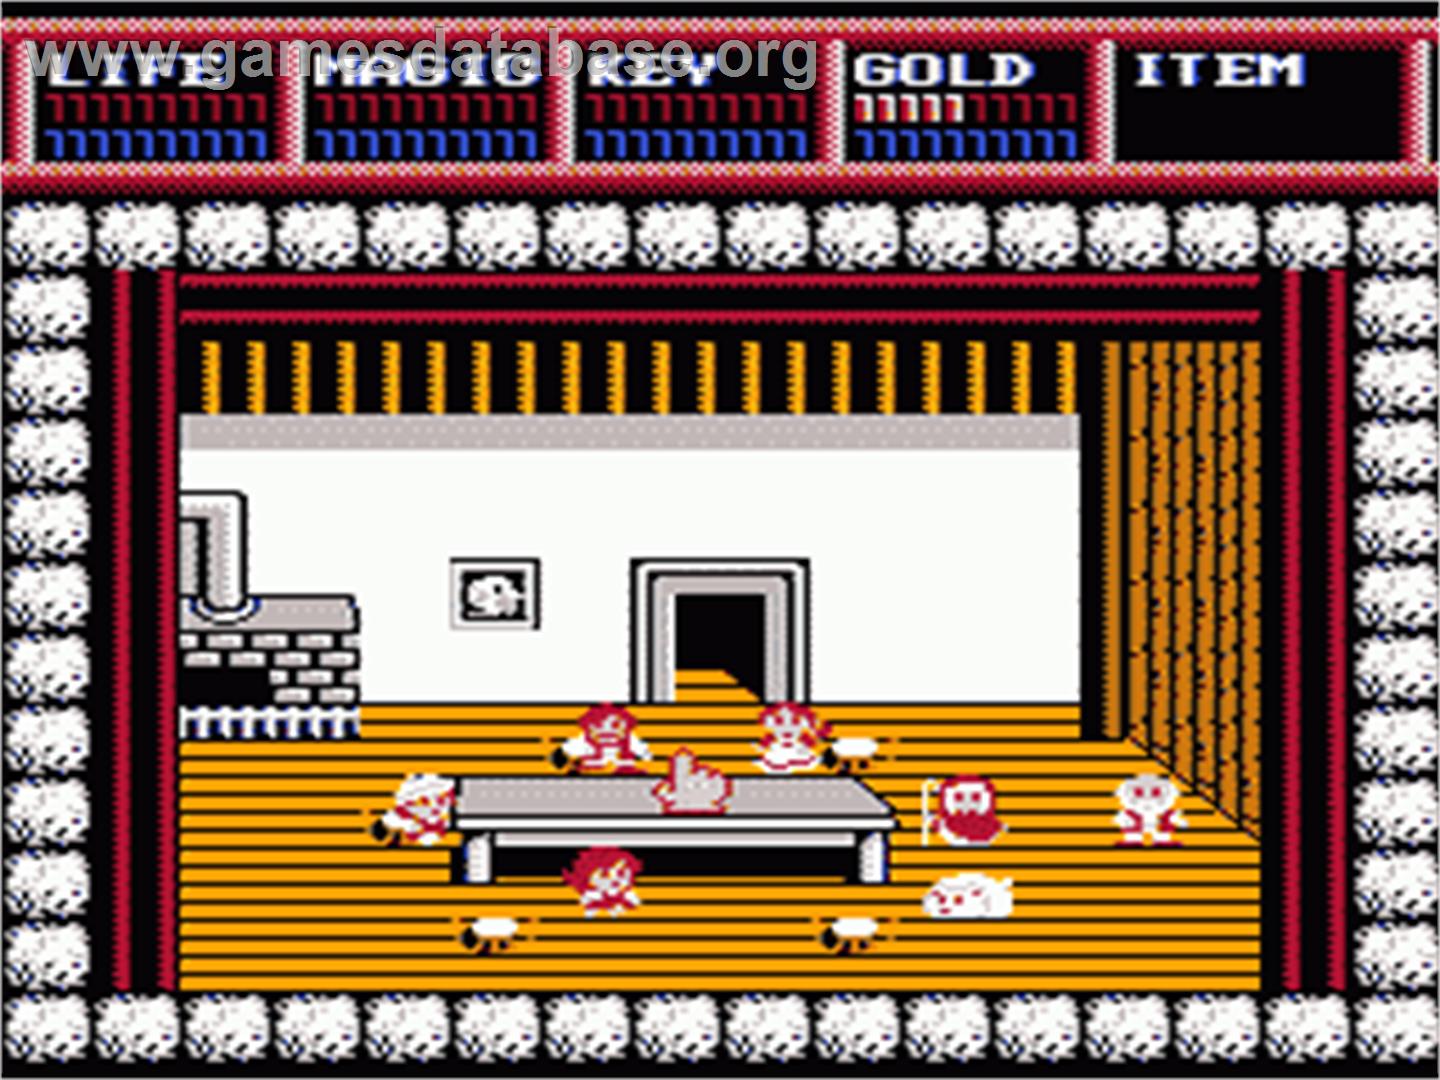 Legends of the Diamond - Nintendo NES - Artwork - In Game